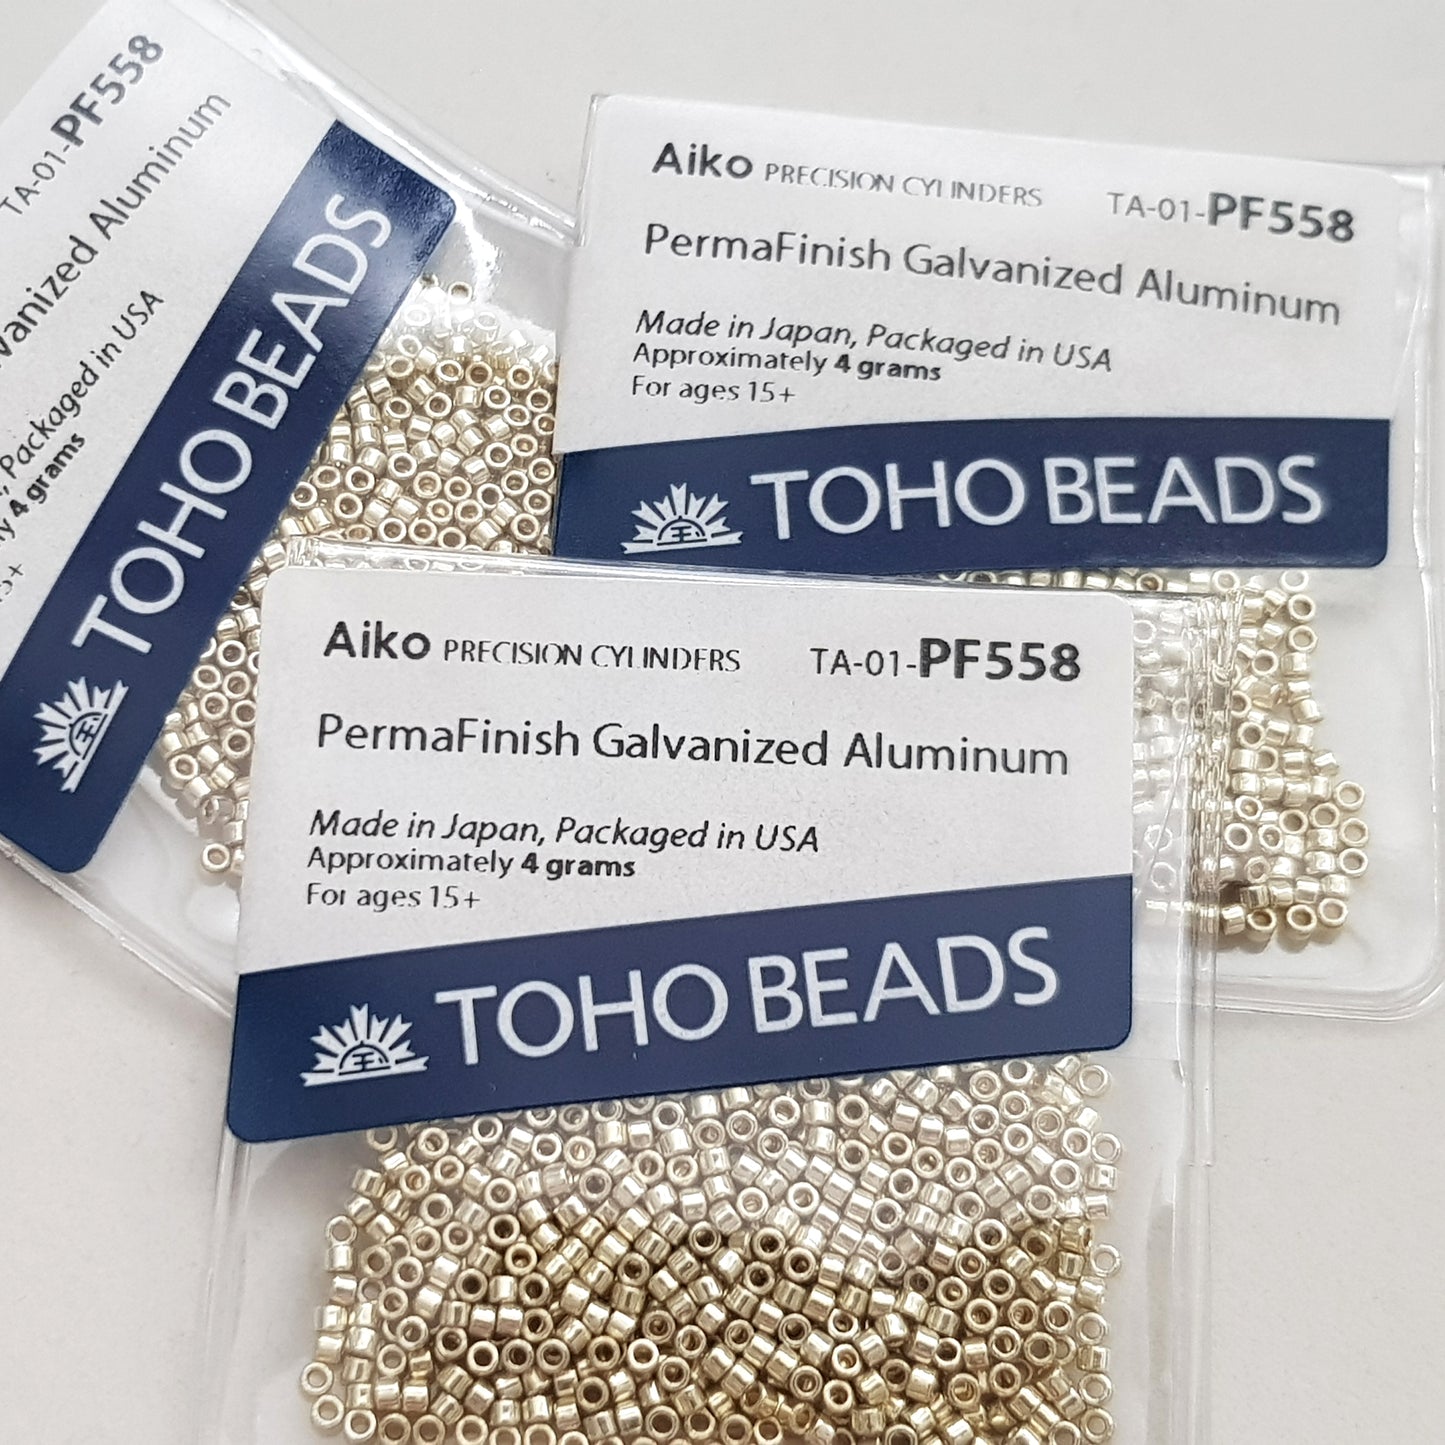 Aiko 11/0 TA-PF558 Aluminium Galvanized PermaFinish 4g Pre-Packed Precision-Cut Cylinder Toho Beads | Beading Supply